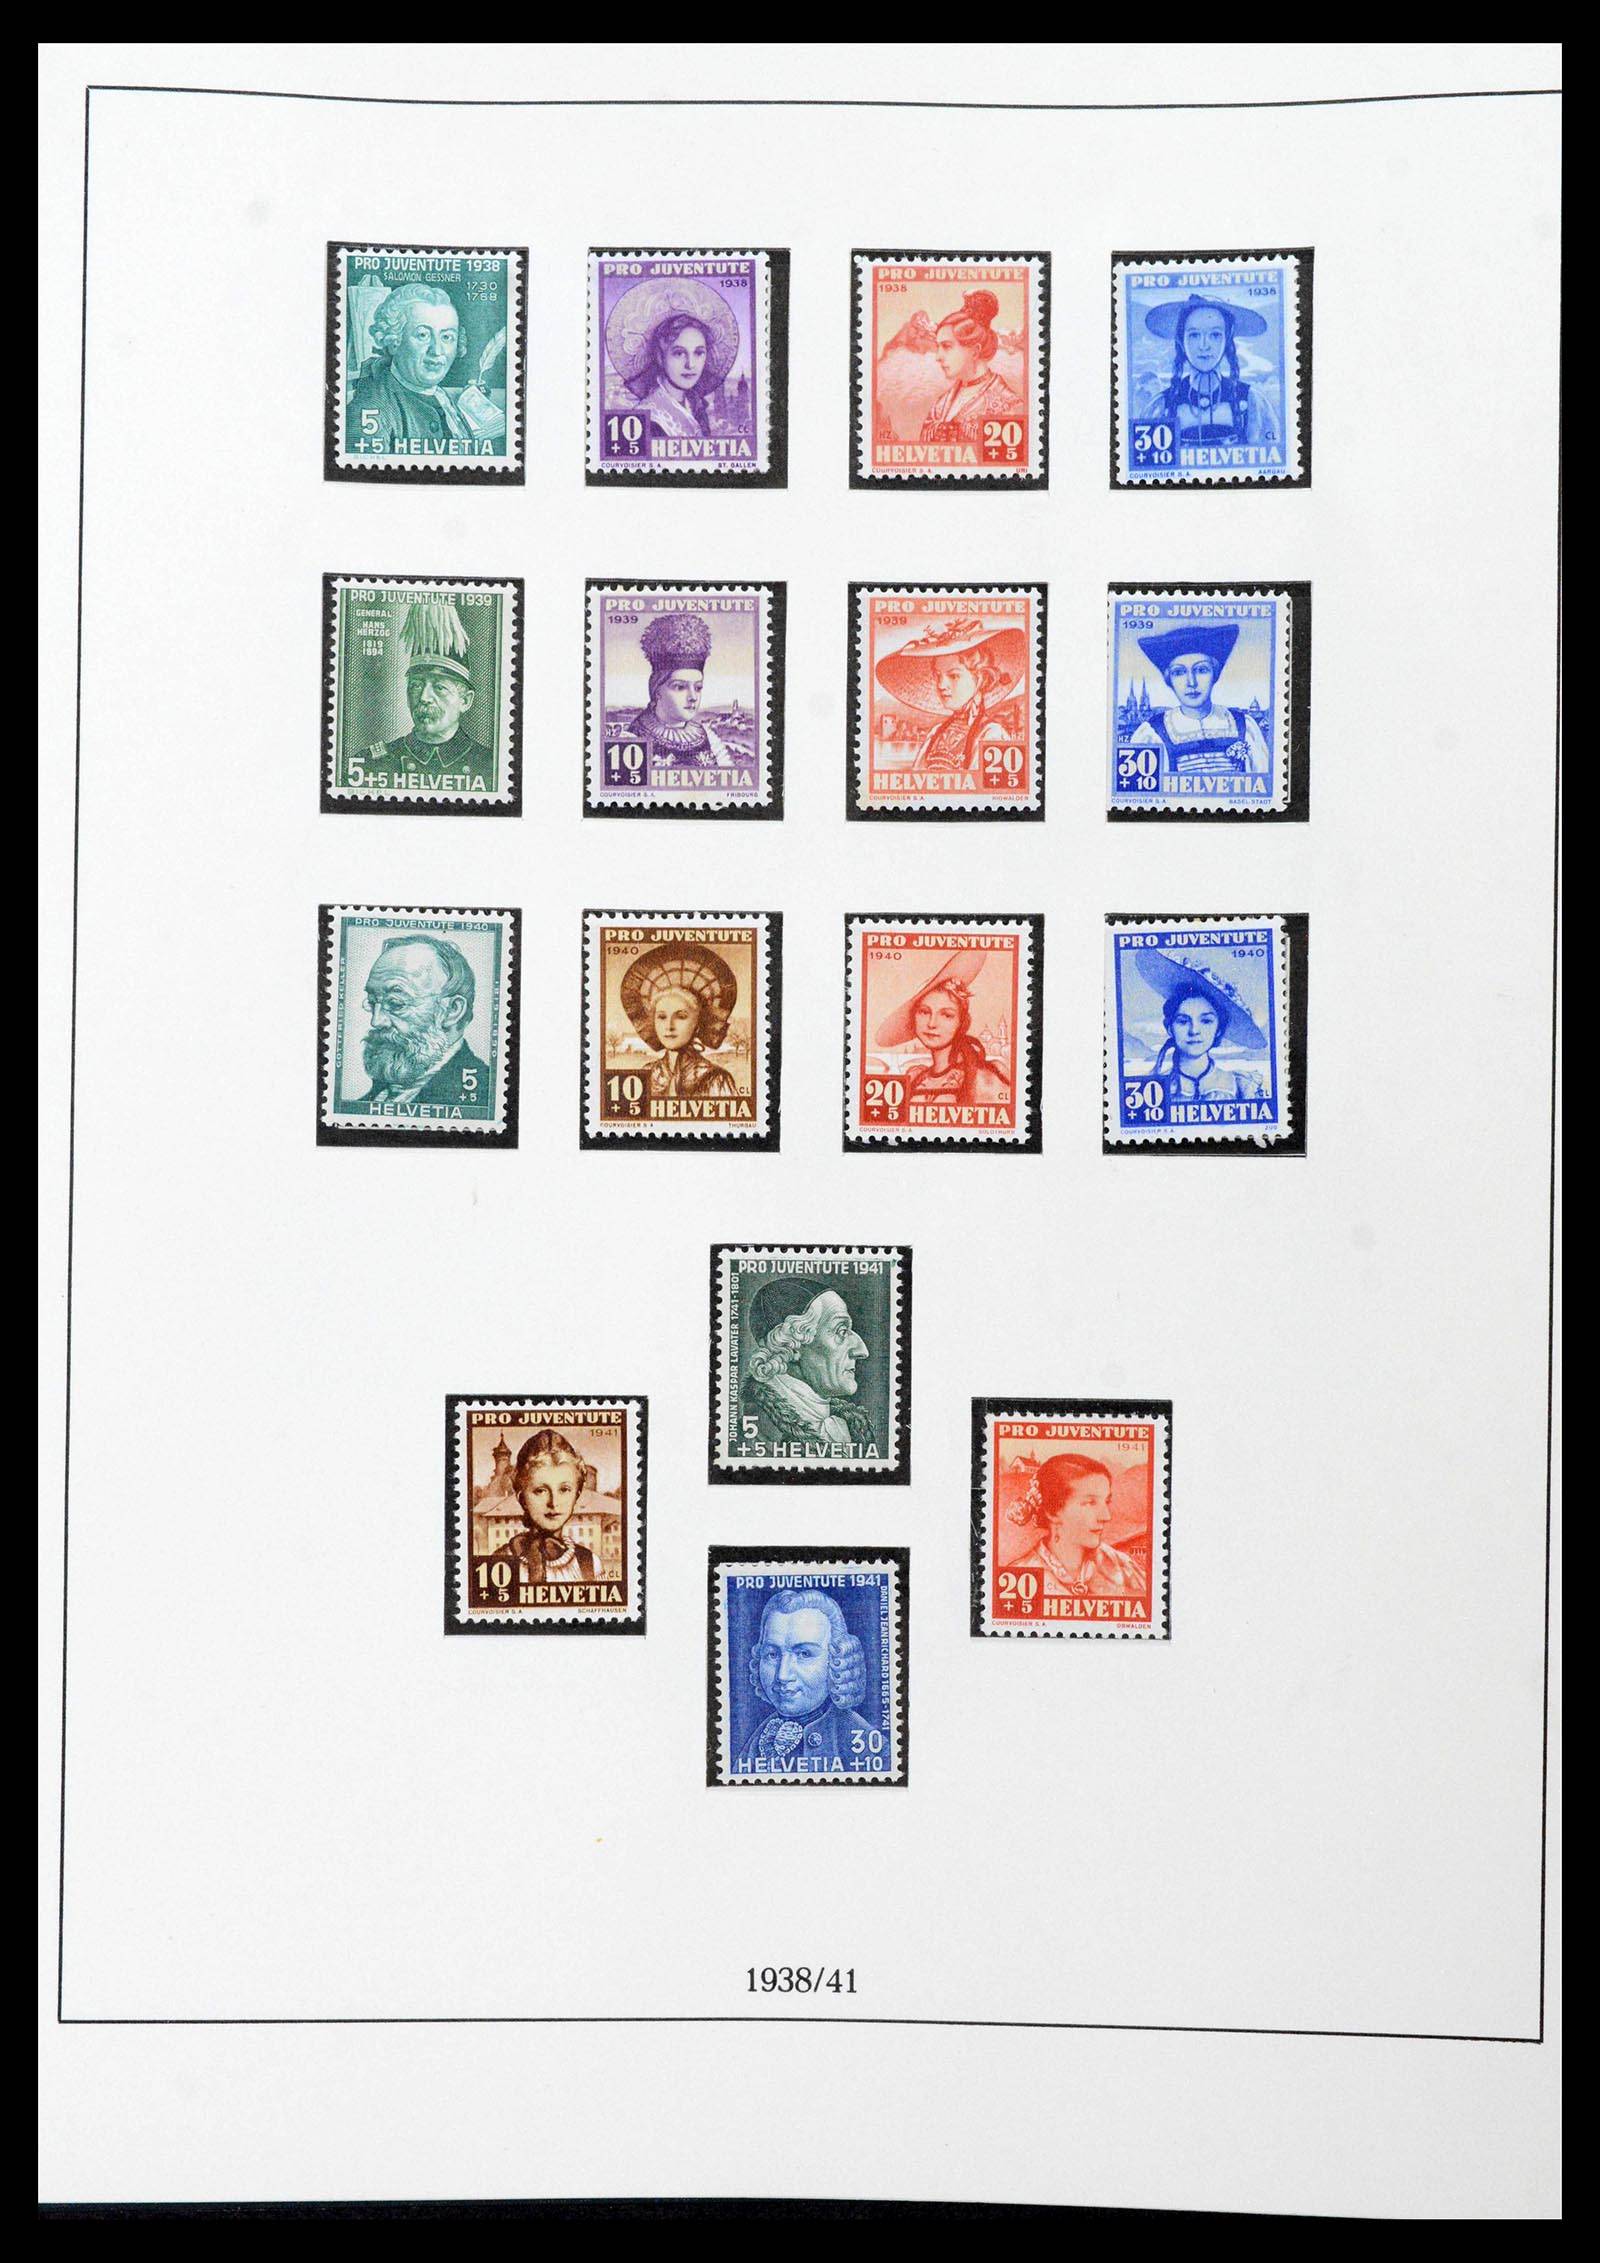 39235 0029 - Stamp collection 39235 Switzerland 1843-1960.